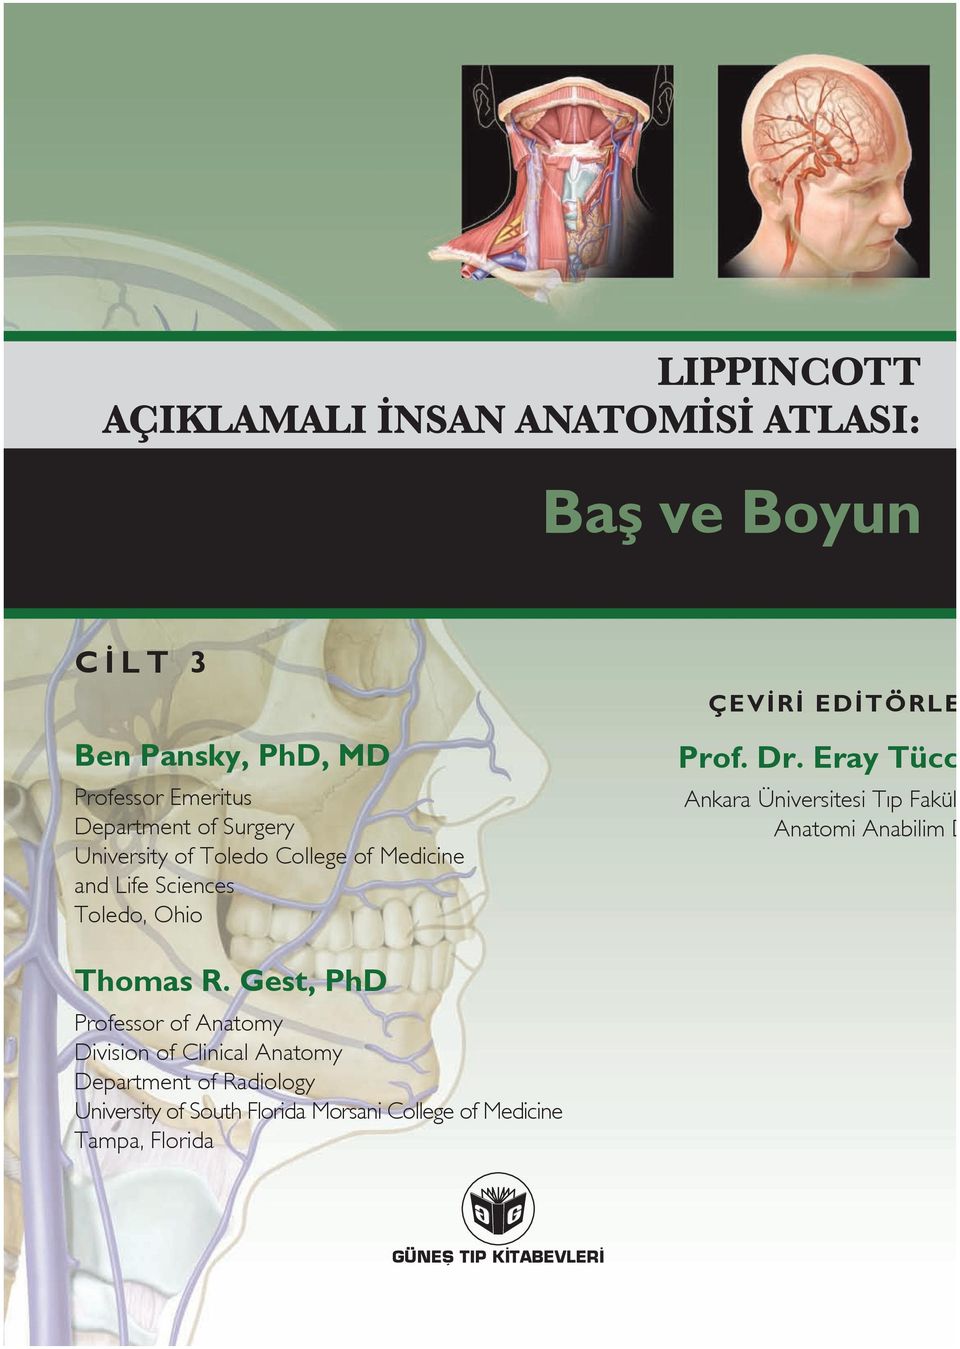 Eray Tücc Ankara Üniversitesi Tıp Fakül Anatomi Anabilim D Thomas R.